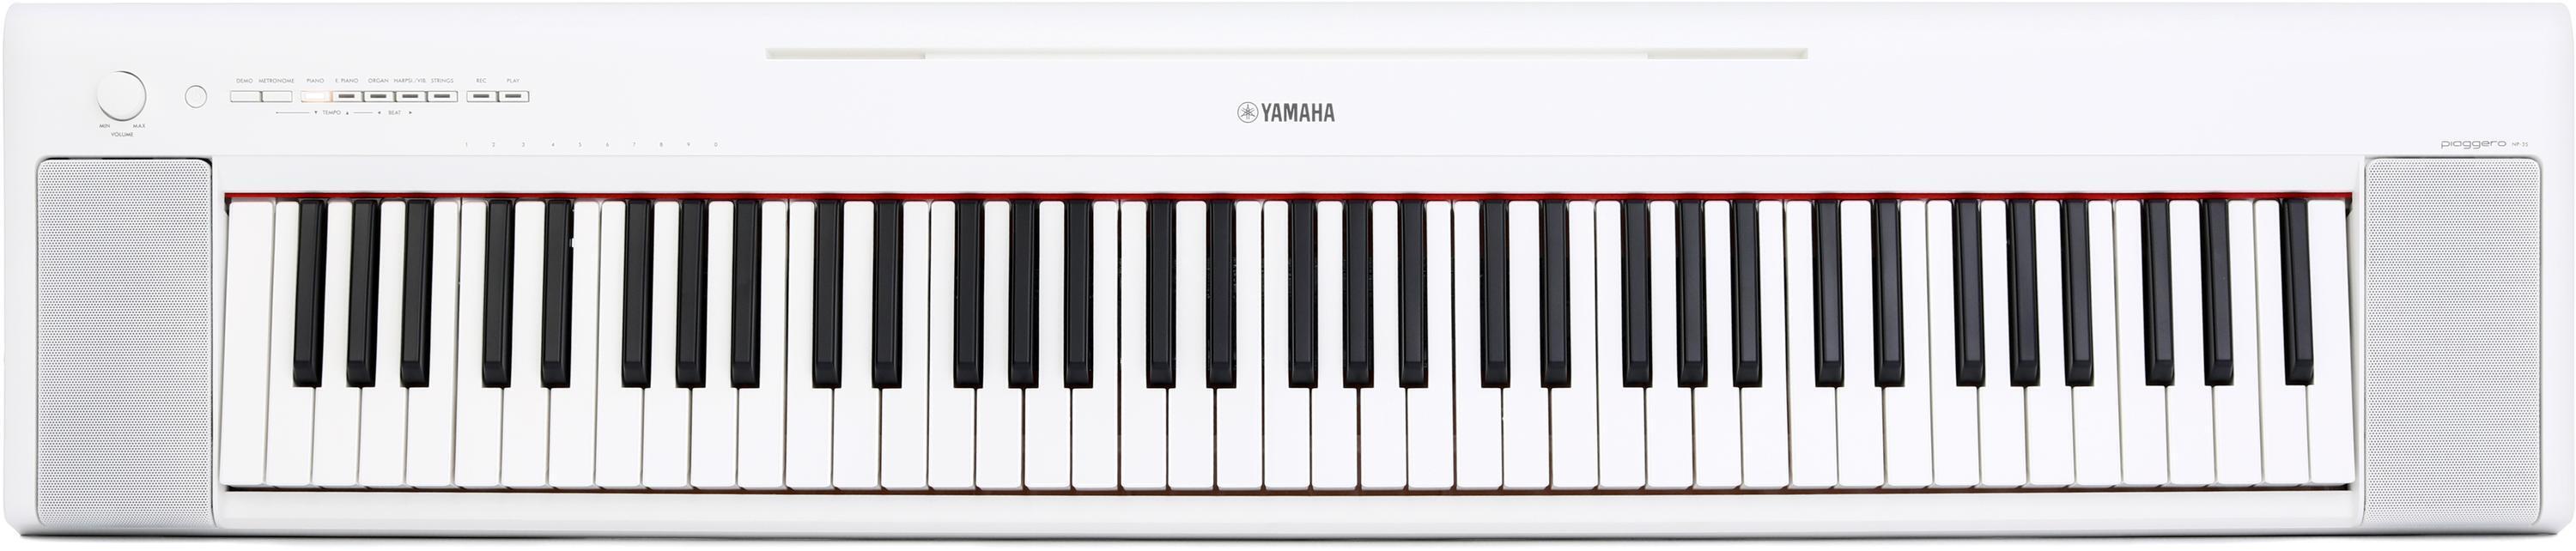 Yamaha Piaggero NP-35 76-key Portable Piano - White | Sweetwater